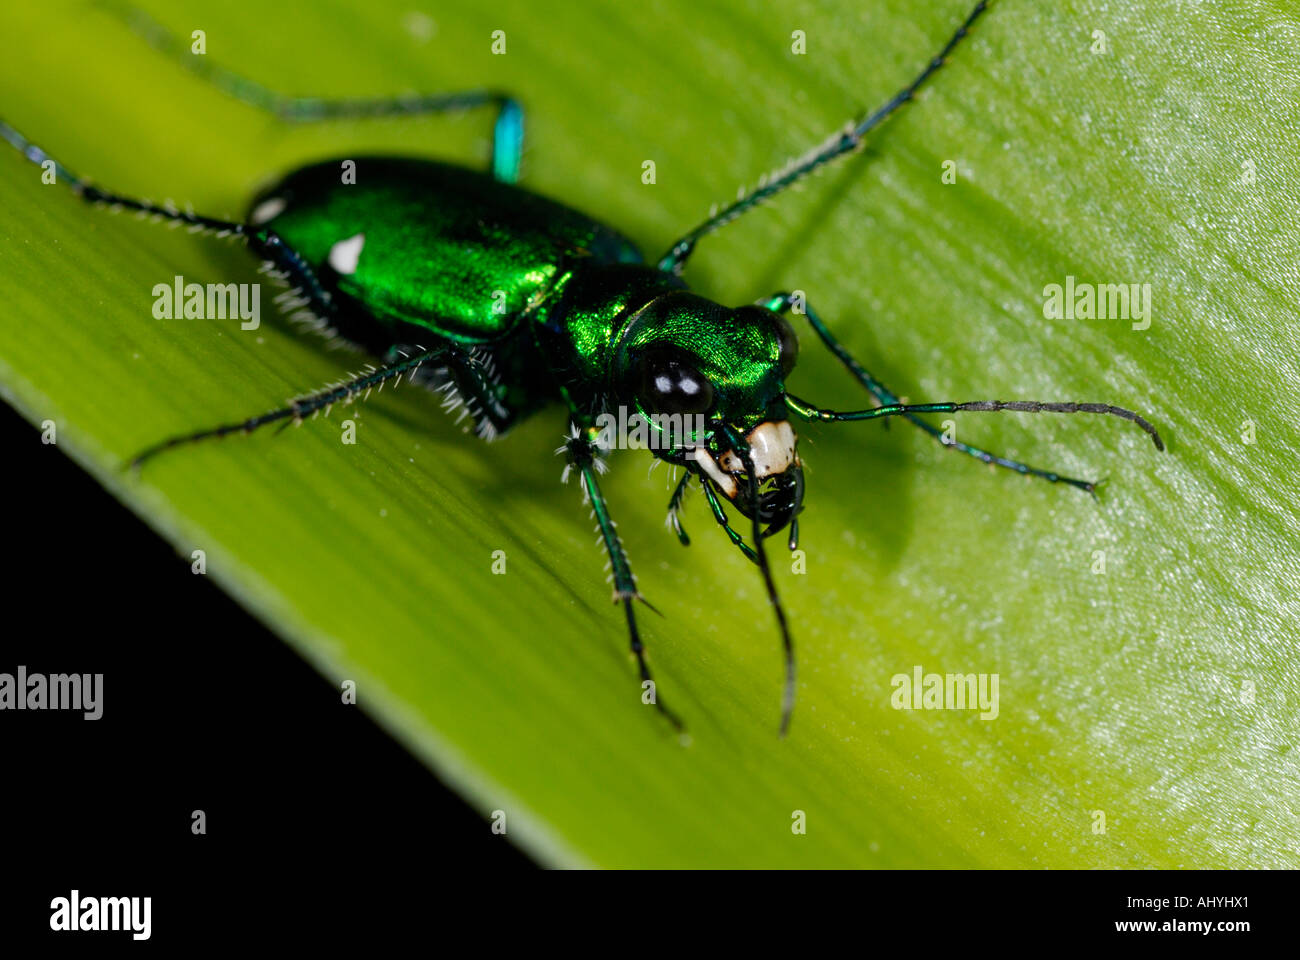 Green 'Tiger Beetle', Cicindela sexguttata, on green leaf Stock Photo